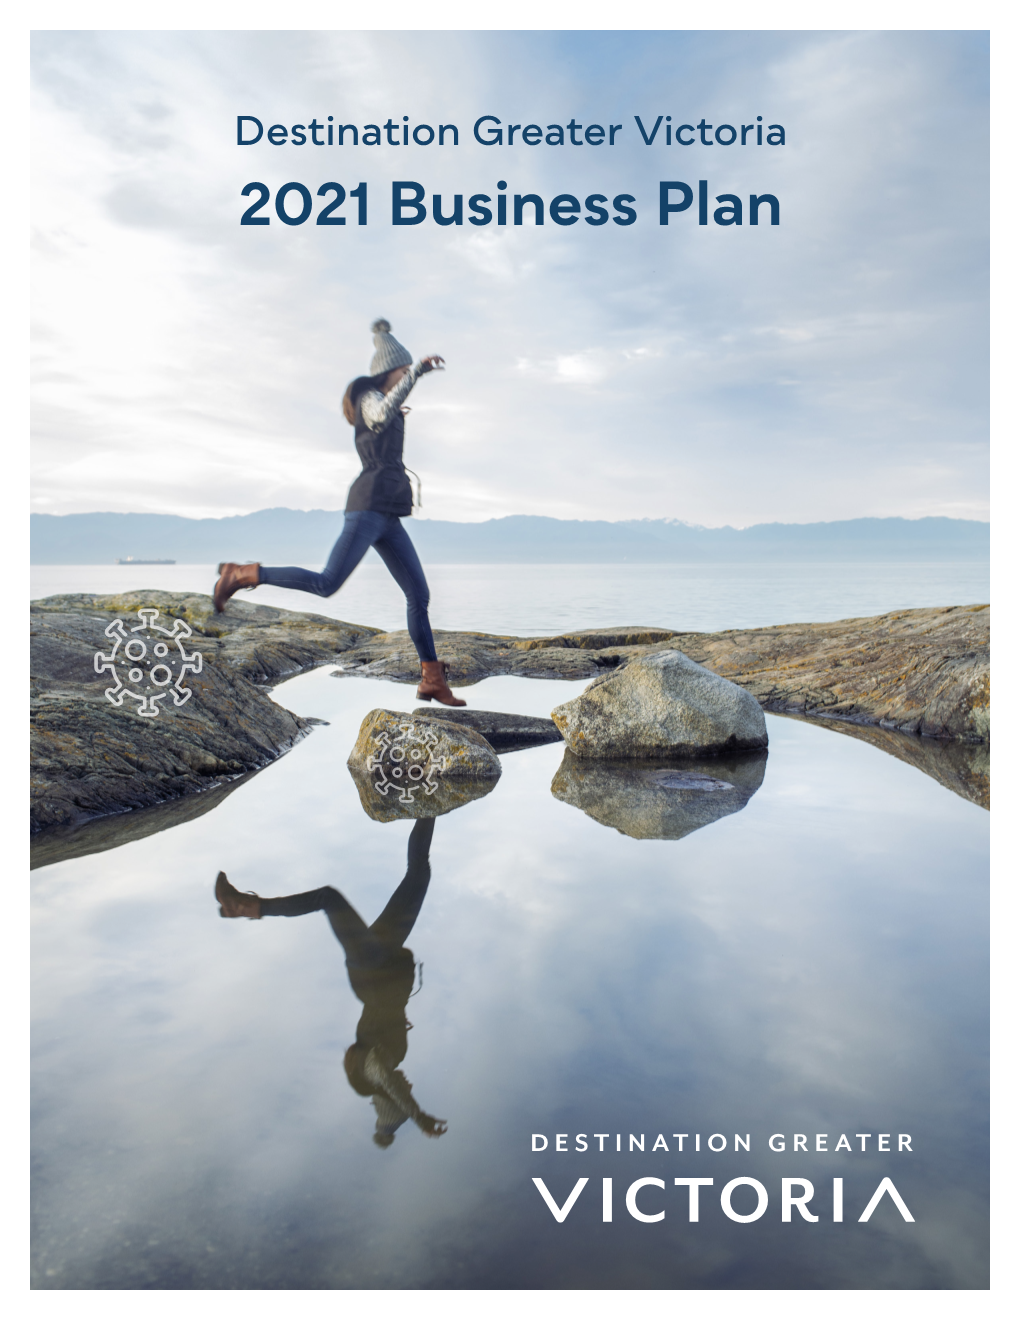 Destination Greater Victoria's 2021 Business Plan